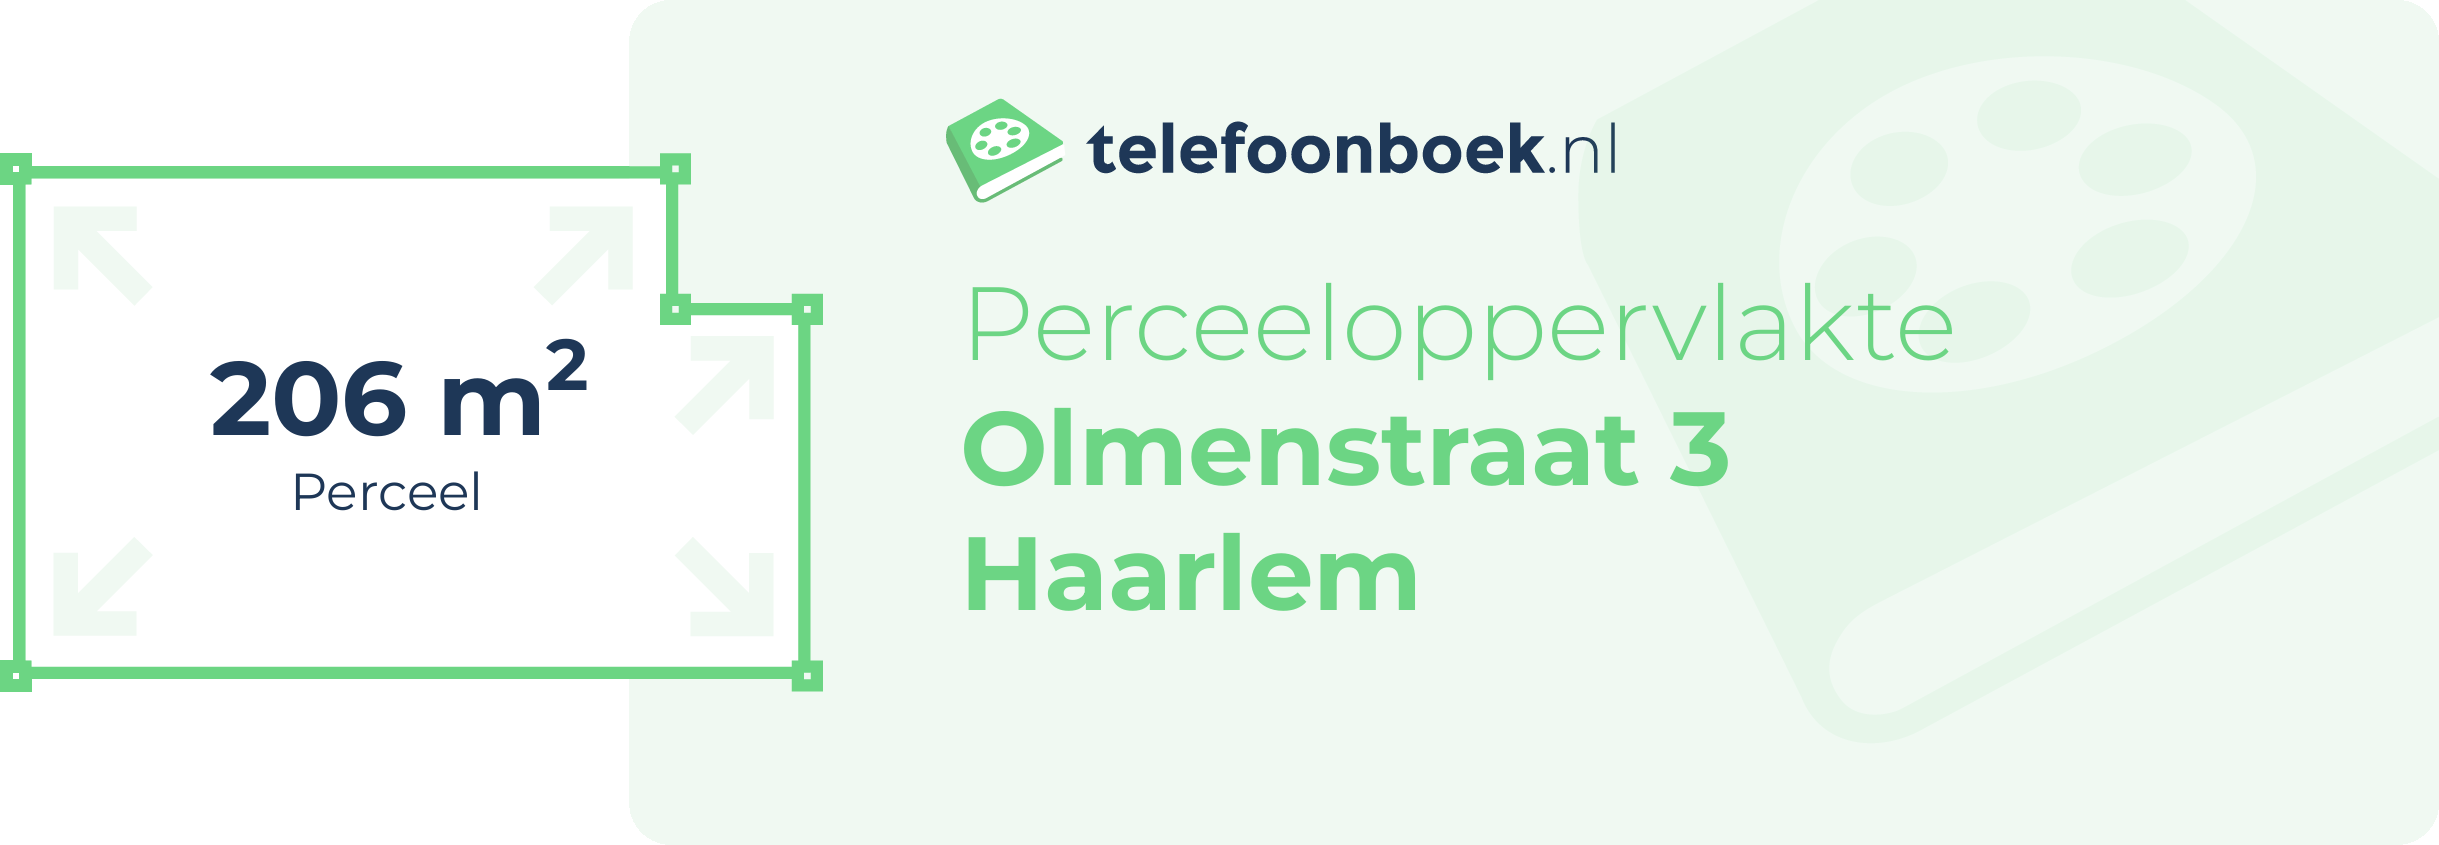 Perceeloppervlakte Olmenstraat 3 Haarlem